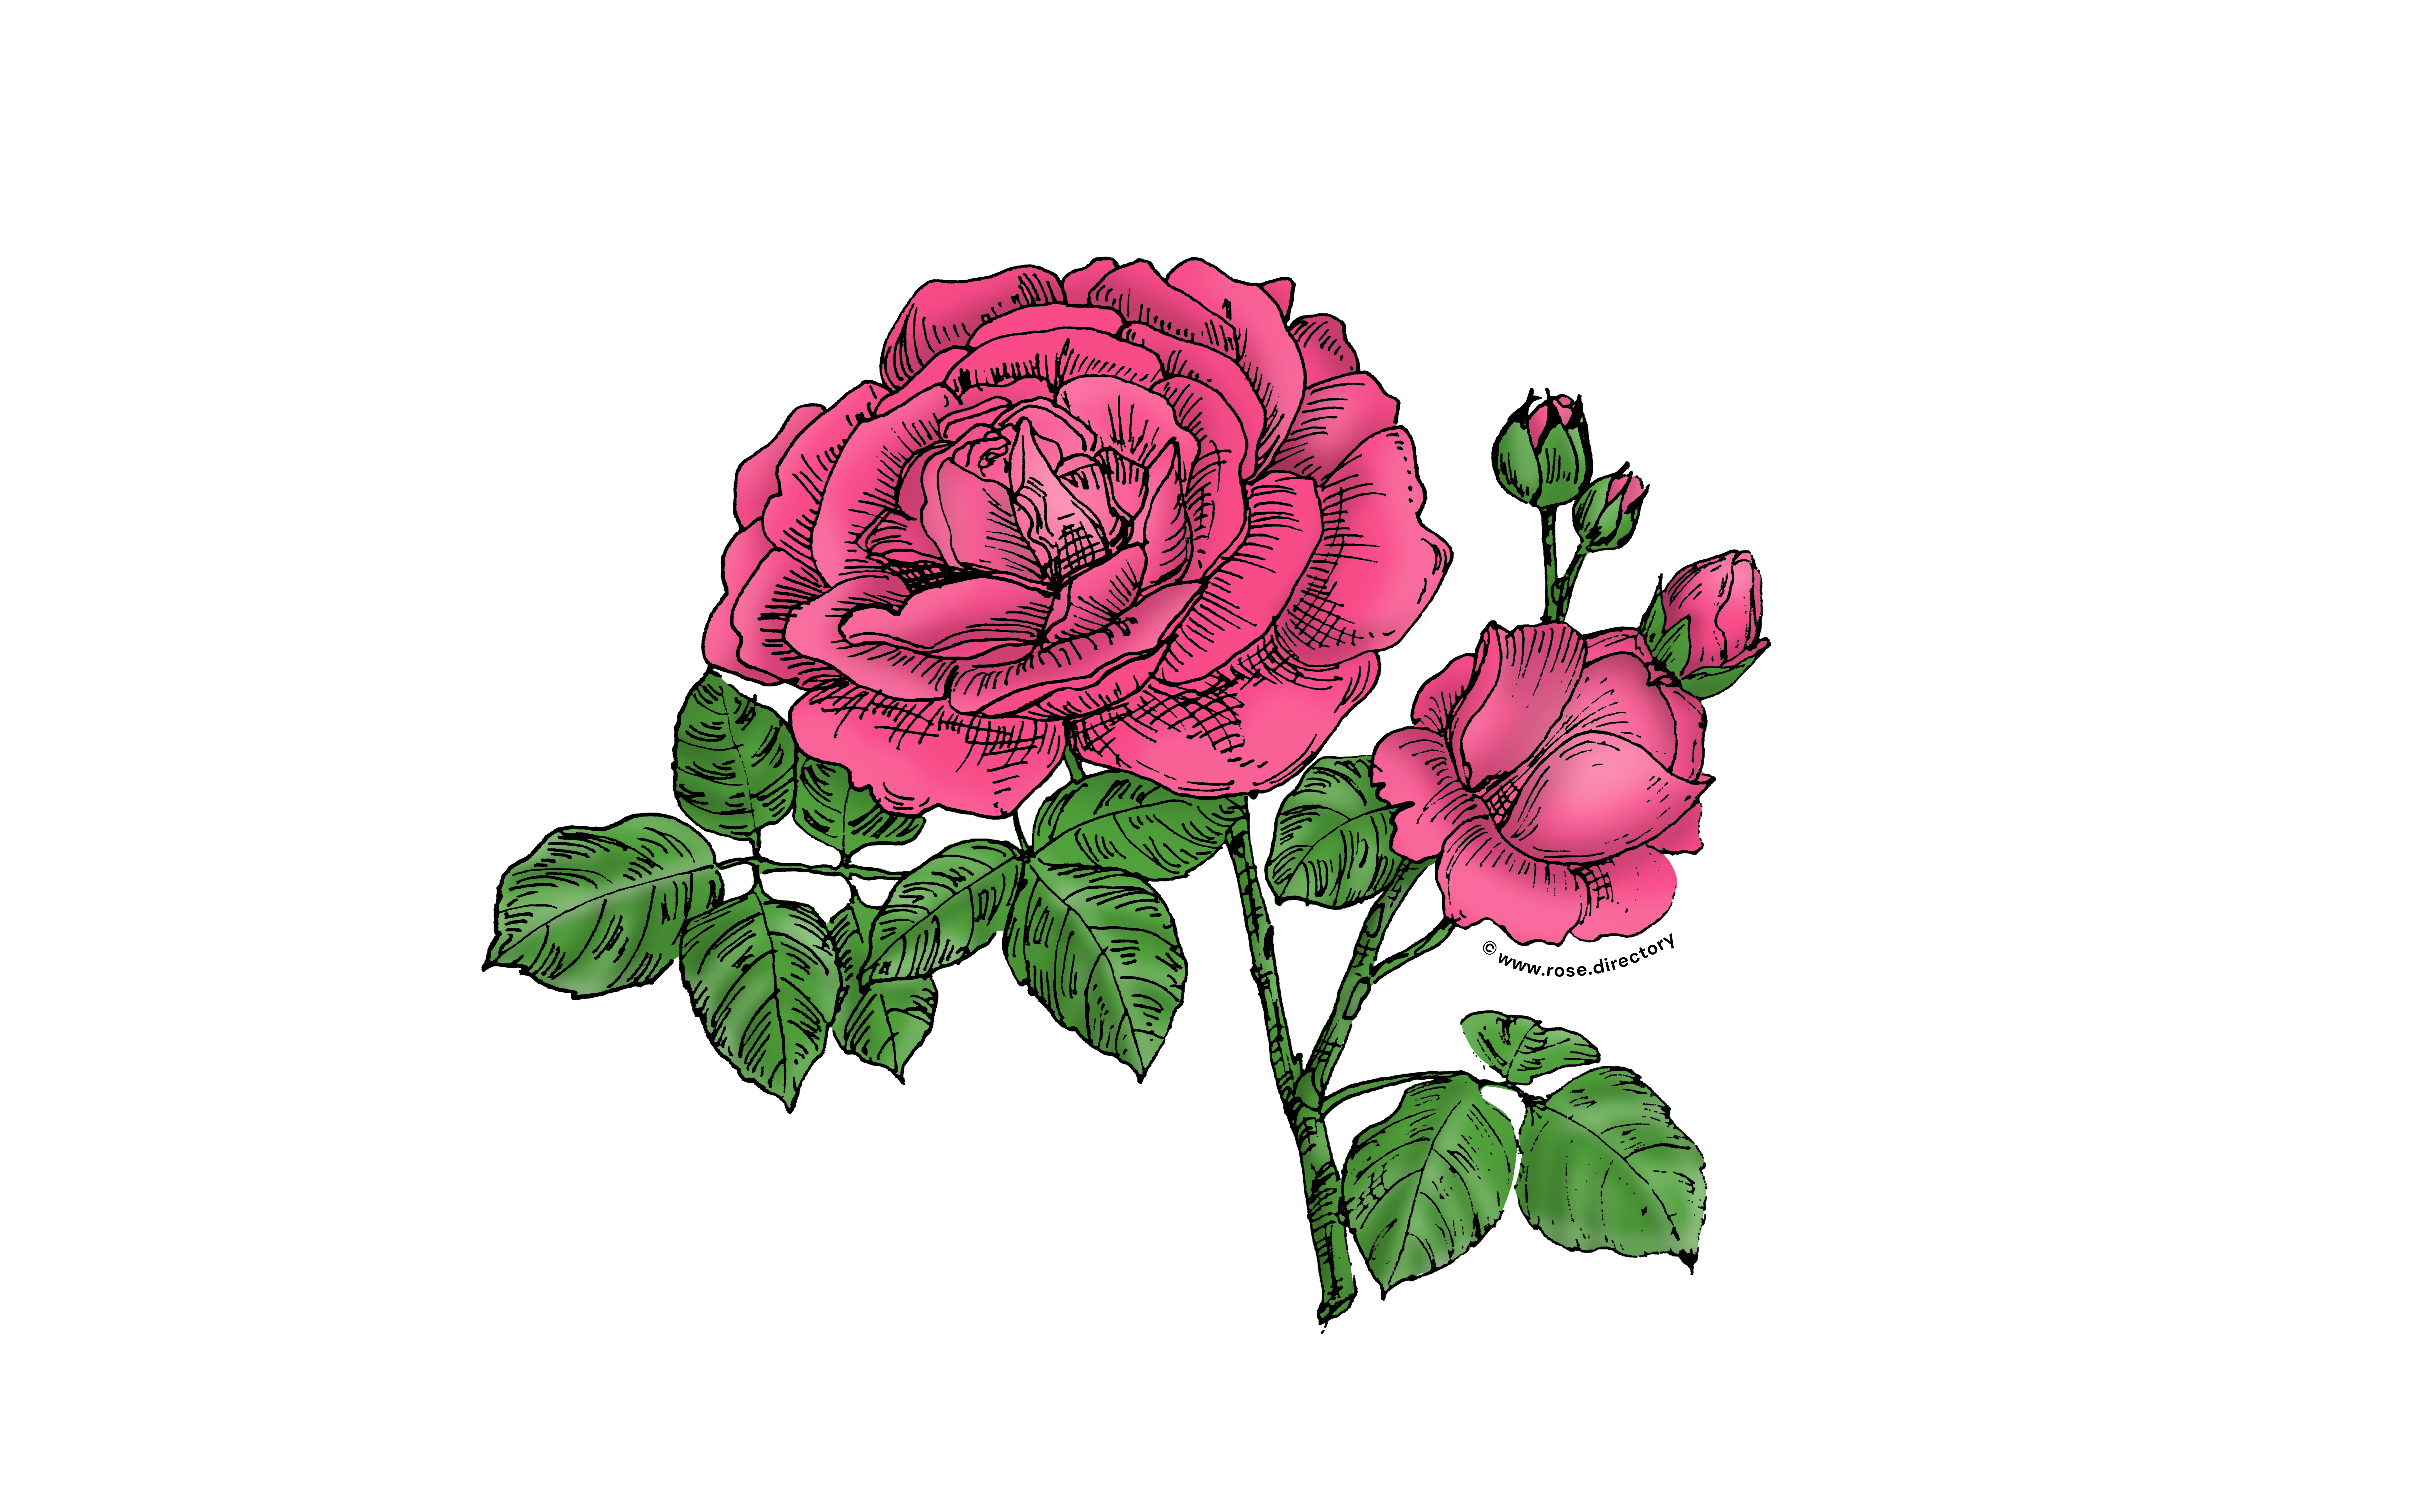 Mid Pink Globular Rose Bloom Full 26-40 Petals In 3+ Rows